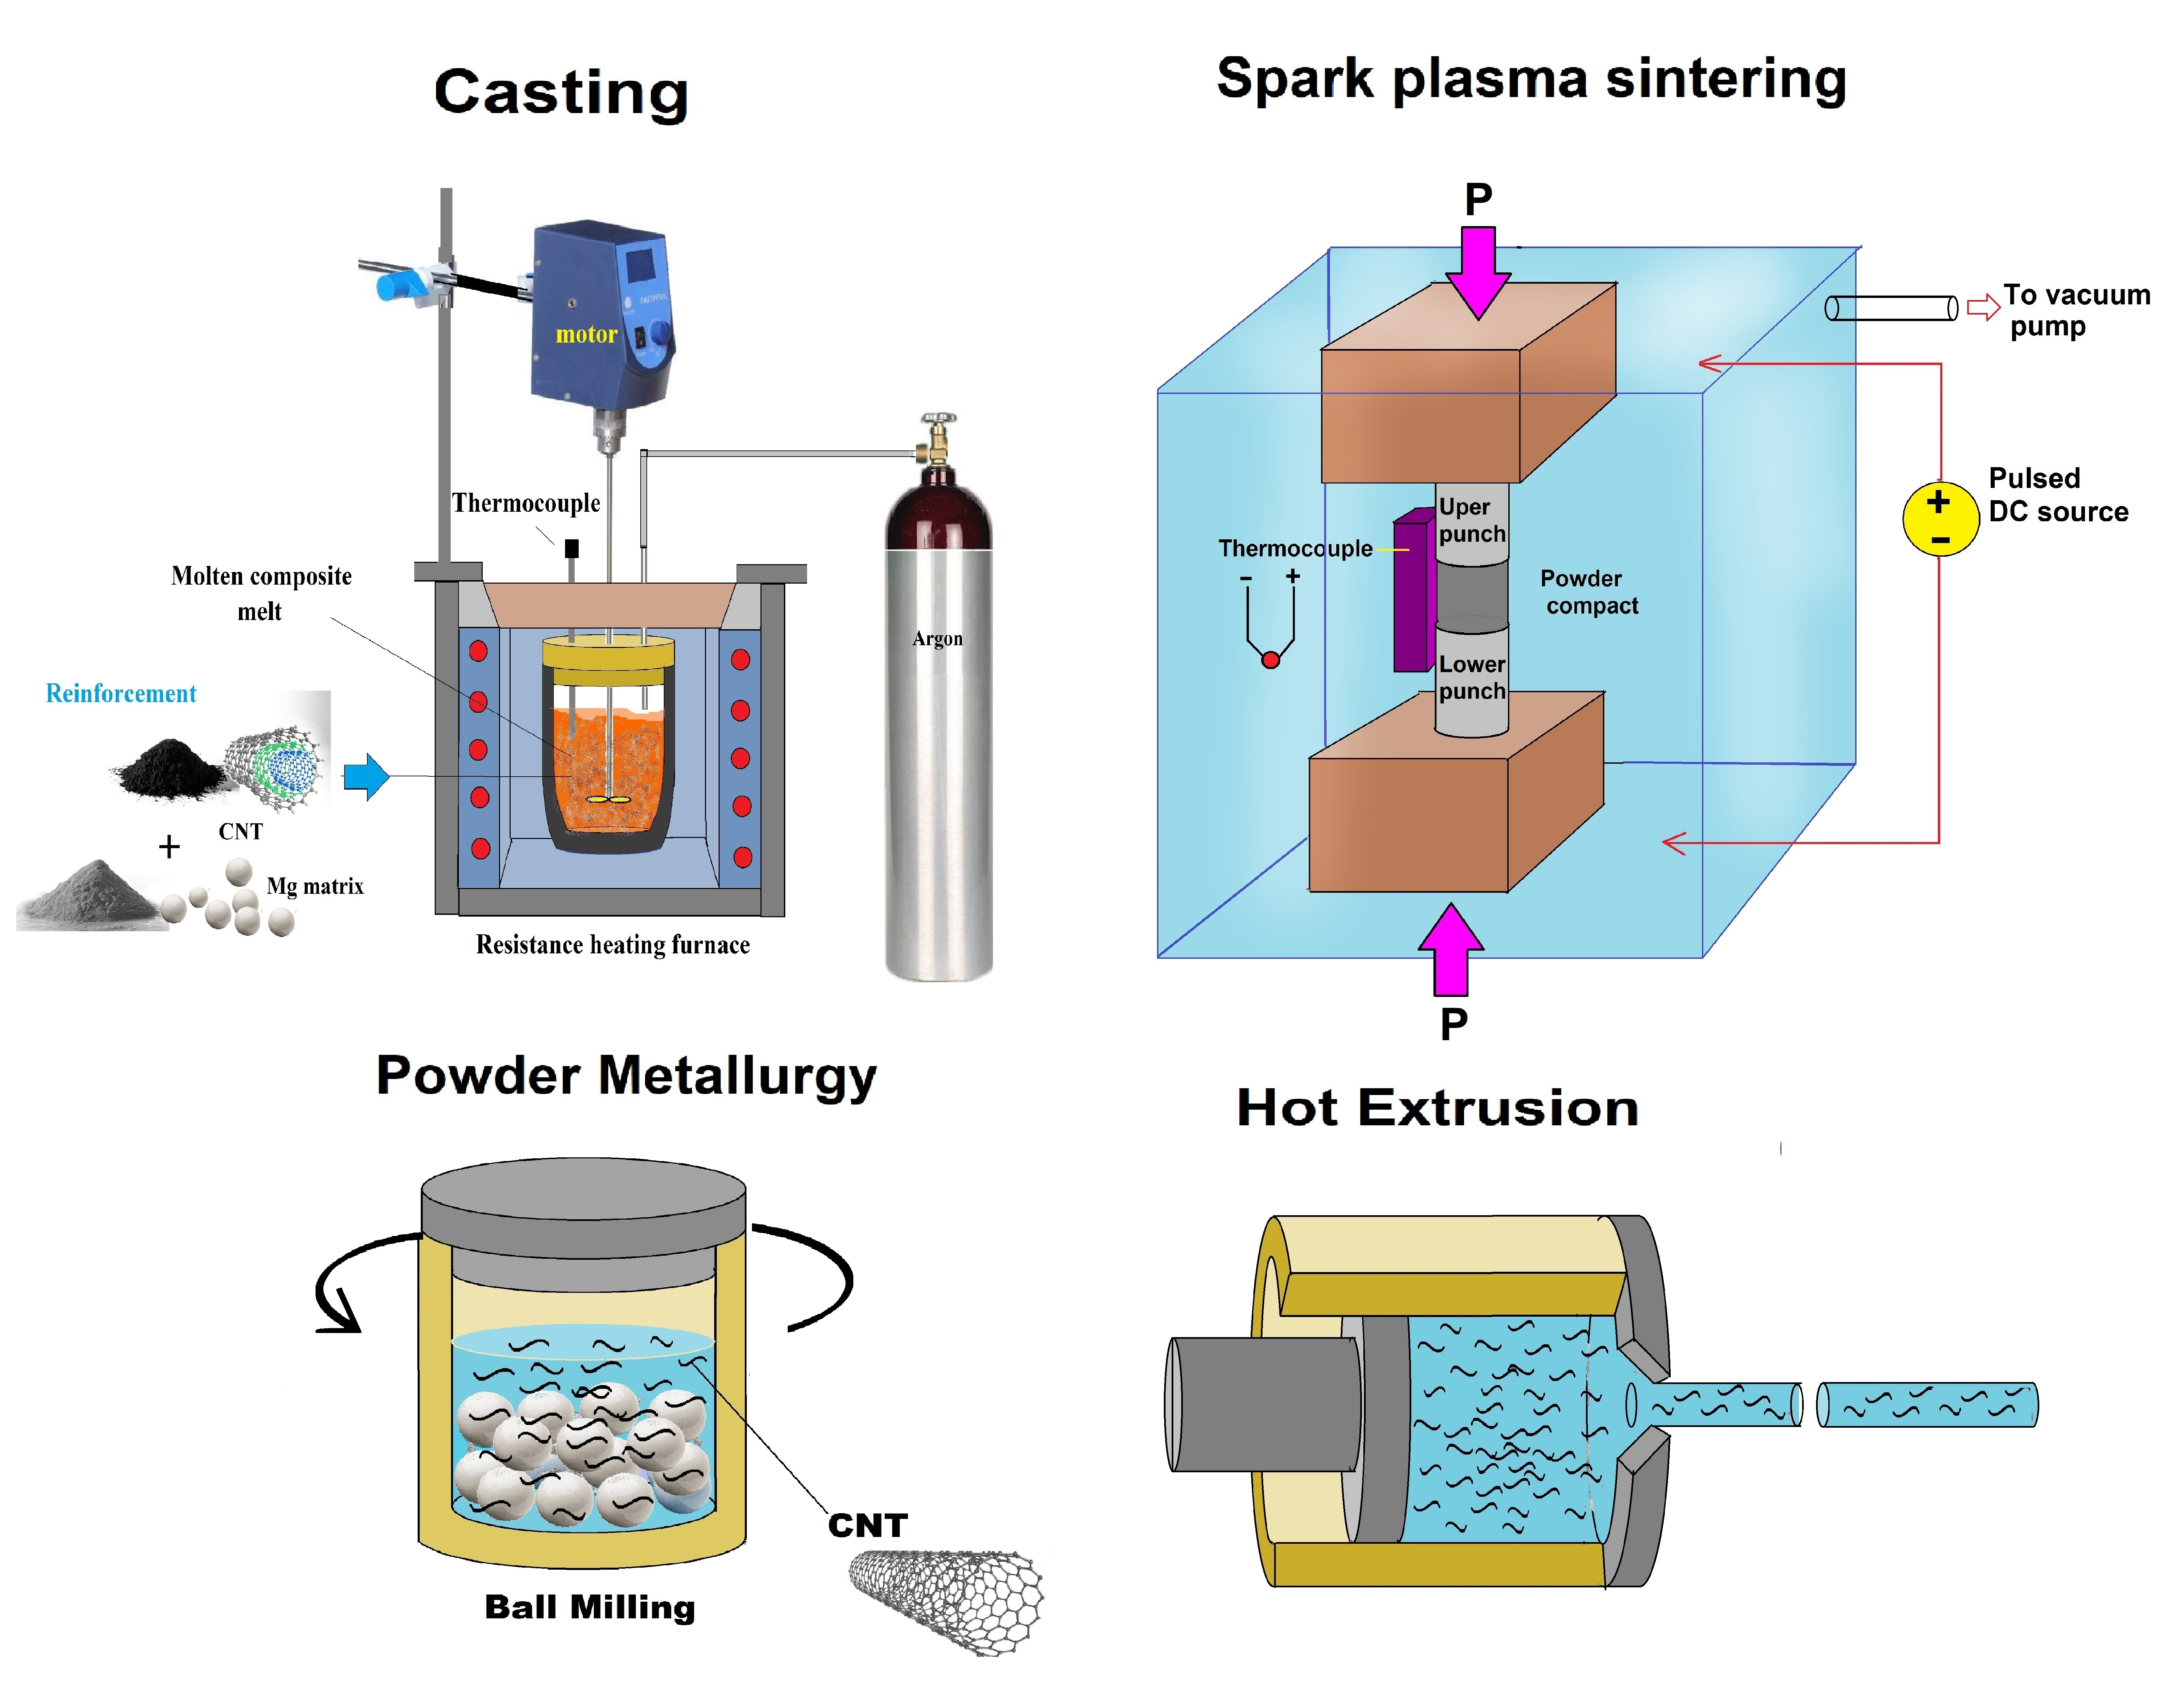 Crack-Assisted Field Emission Enhancement of Carbon Nanotube Films for  Vacuum Electronics